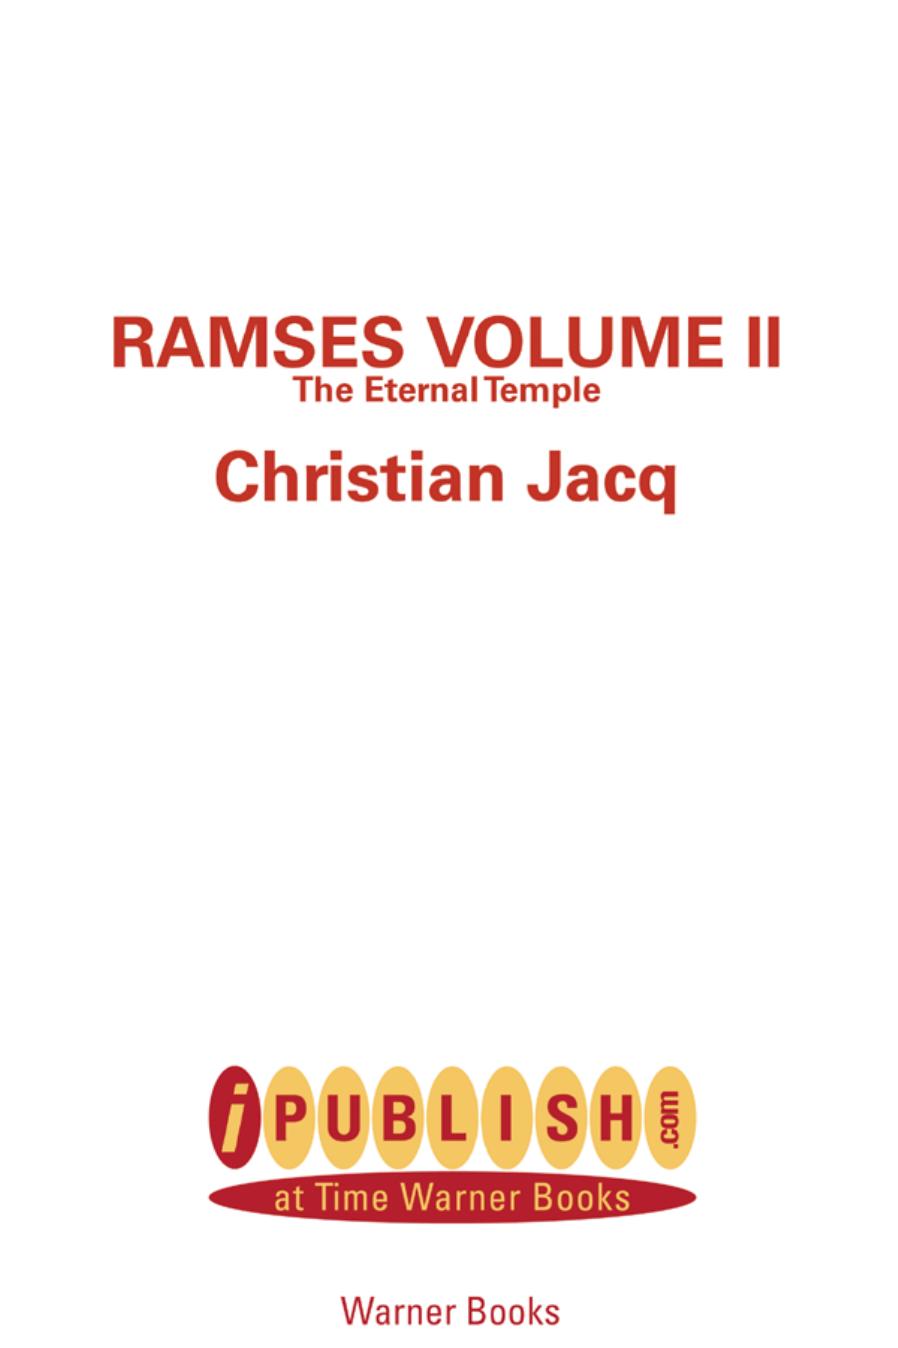 Ramses, Volume II by Christian Jacq